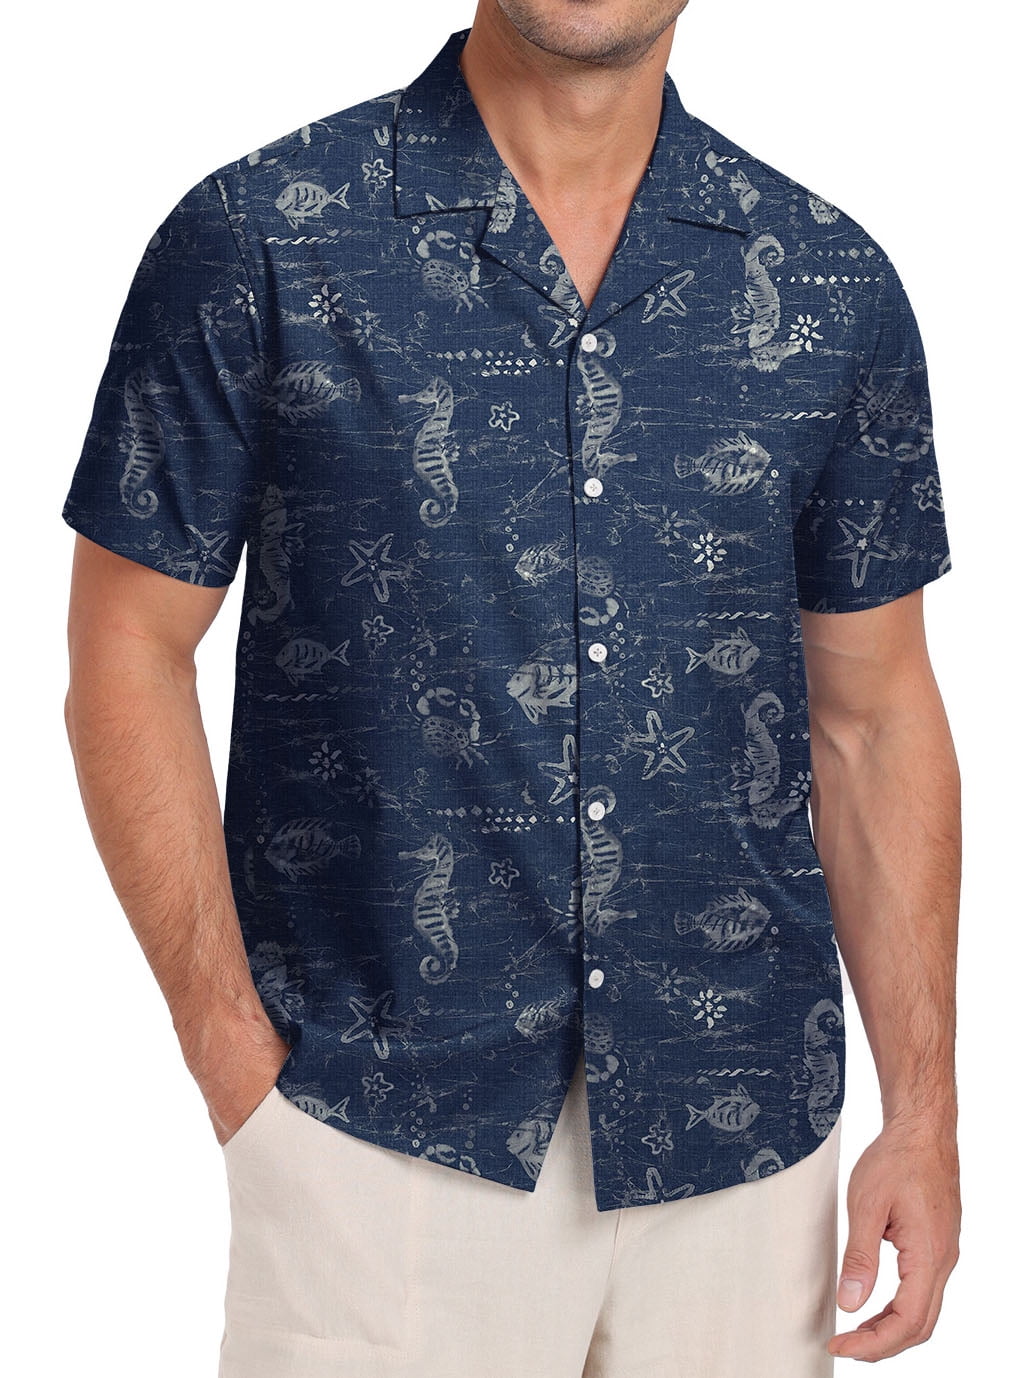 B91xZ Shirts for Men Men Spring and Summer Top Shirts Stripe Casual Lapel  Single Beach Shirt Outdoor Short Sleeve Mens Shirts Black,Size S 